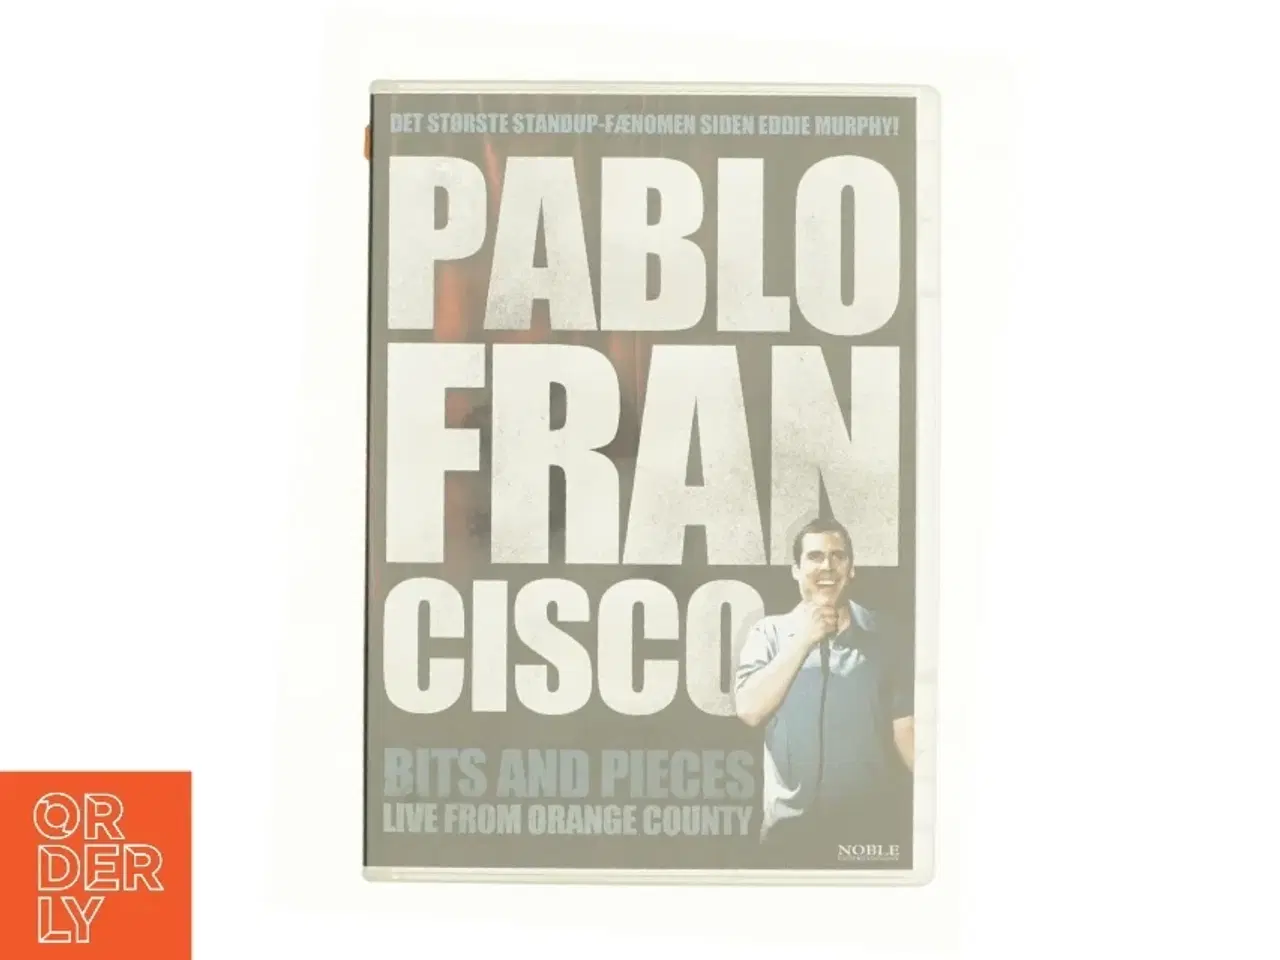 Billede 1 - Pablo Fran cisco, Bits and pieces